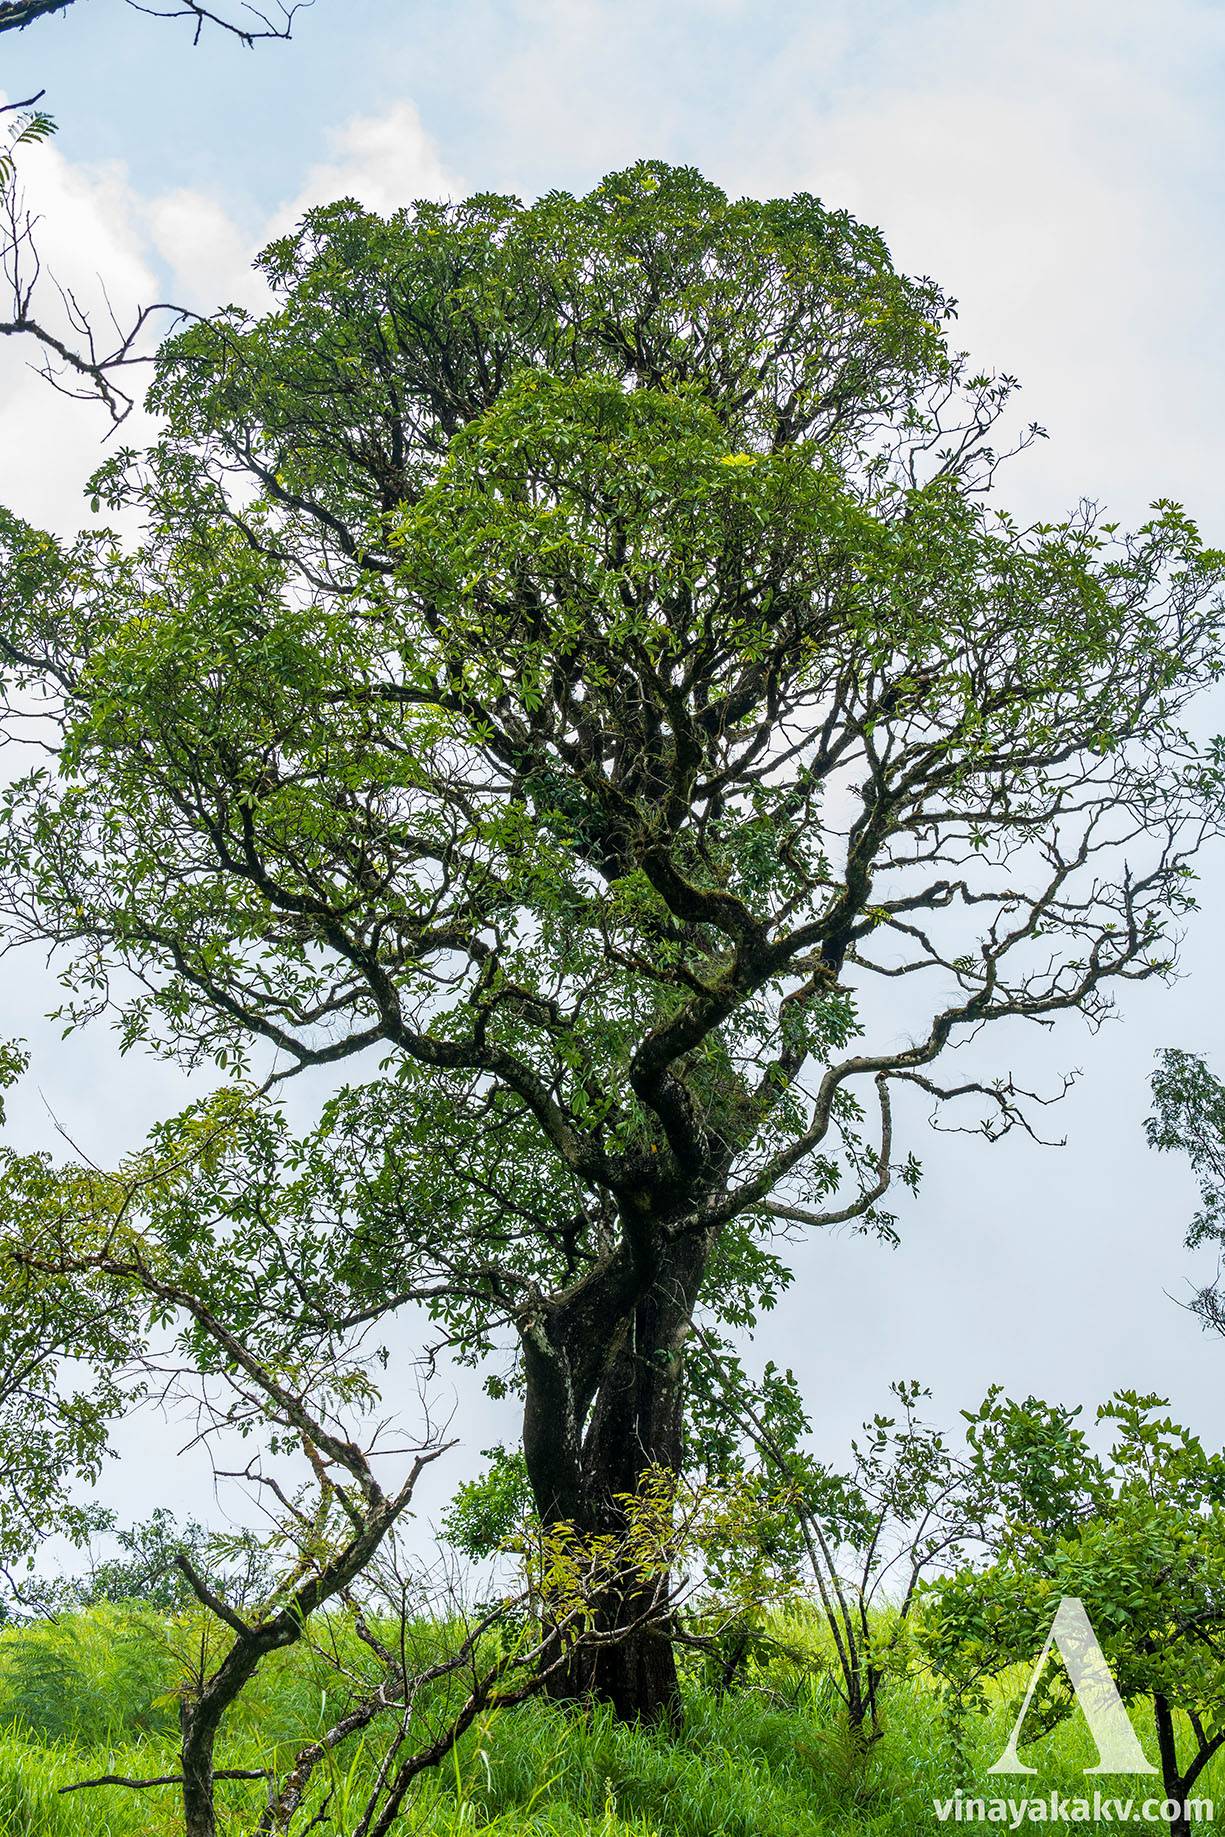 A medium size tree isolated from sholas